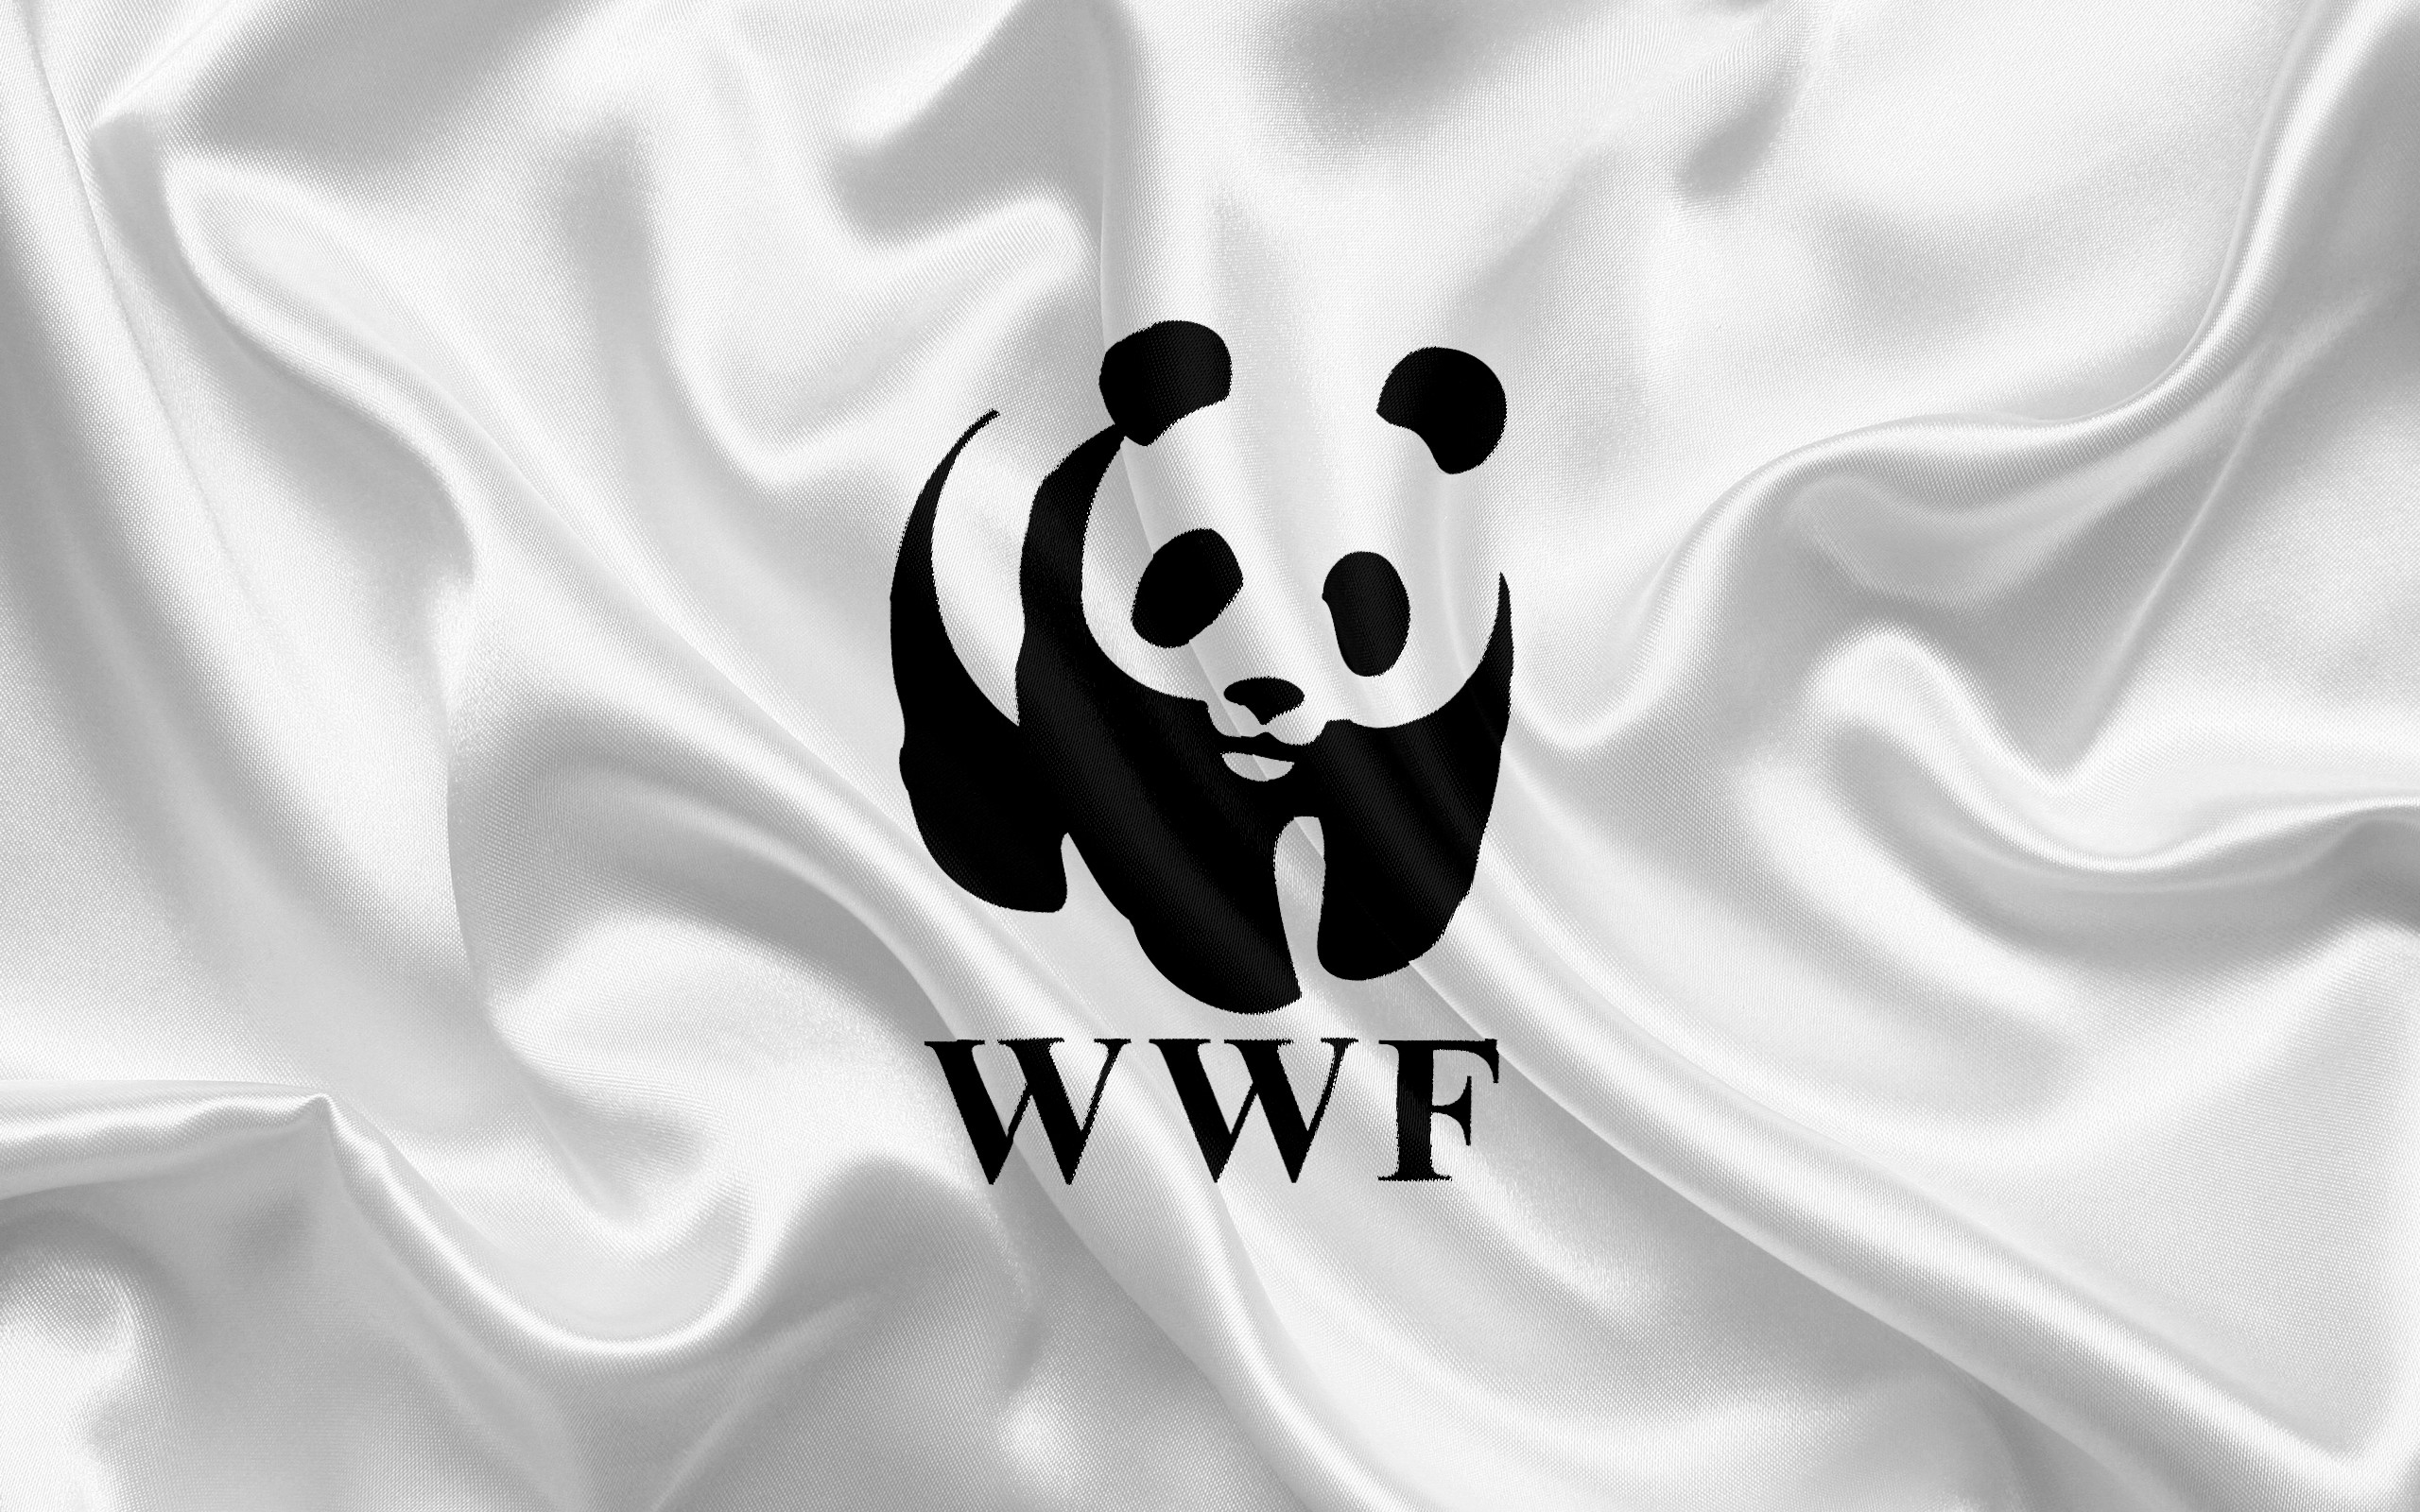 2560x1600 WWF flag, World Wildlife Fund, white silk flag, WWF emblem, panda,